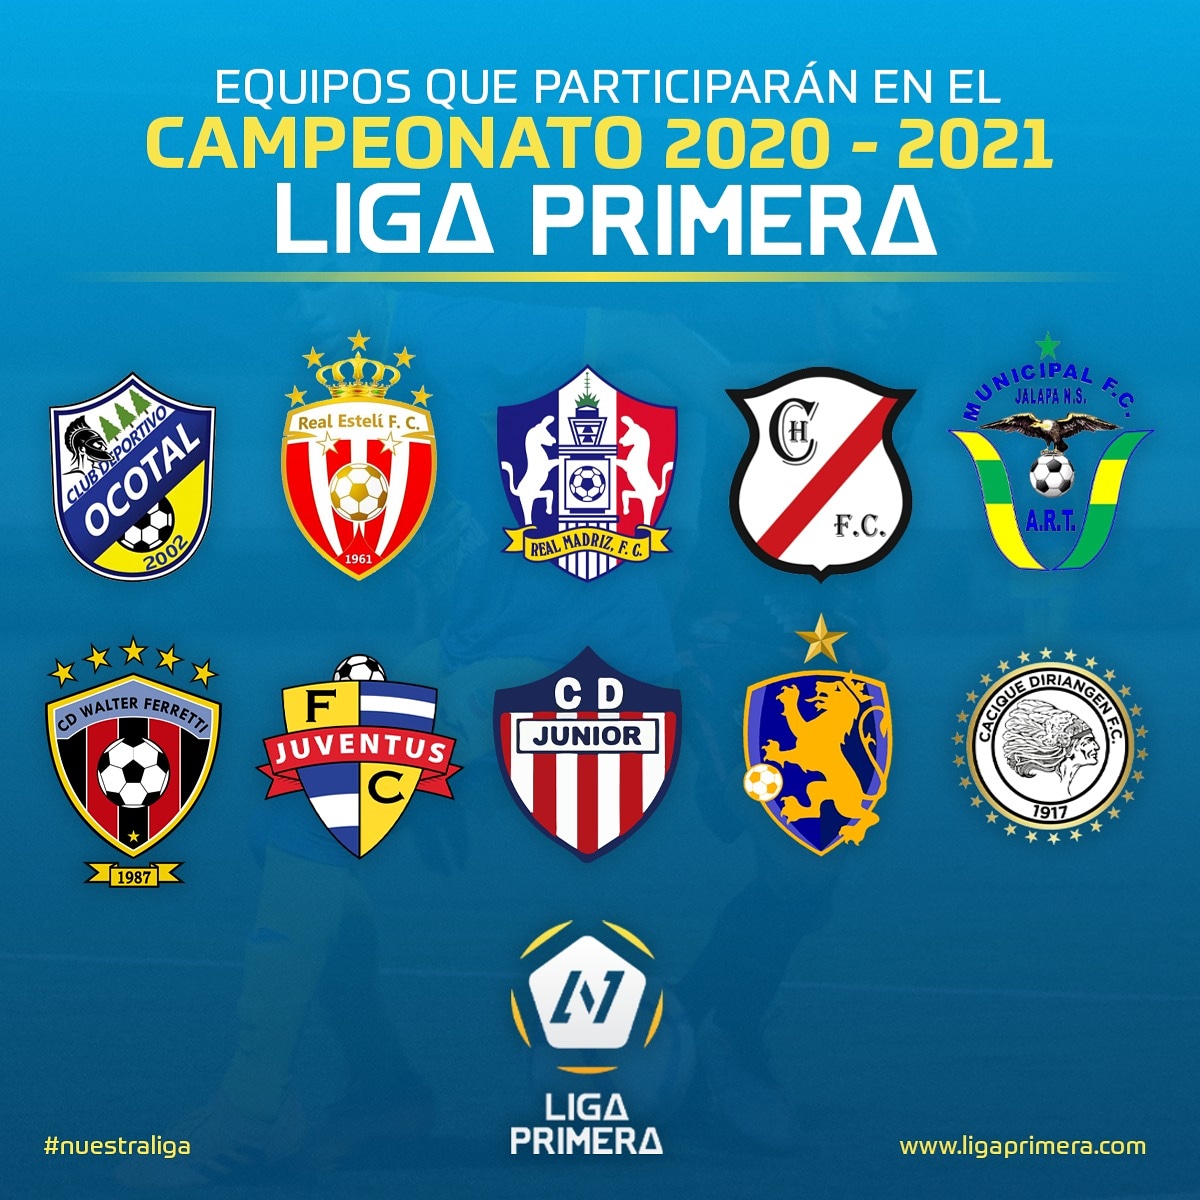 تويتر \ Liga Primera على تويتر: "El Campeonato 2020-2021 de #nuestraliga tendrá la de 4 equipos norteños, 3 la 2 orientales y 1 de occidente ¡Esto es Liga Primera! https://t.co/1rtrw65jfE"